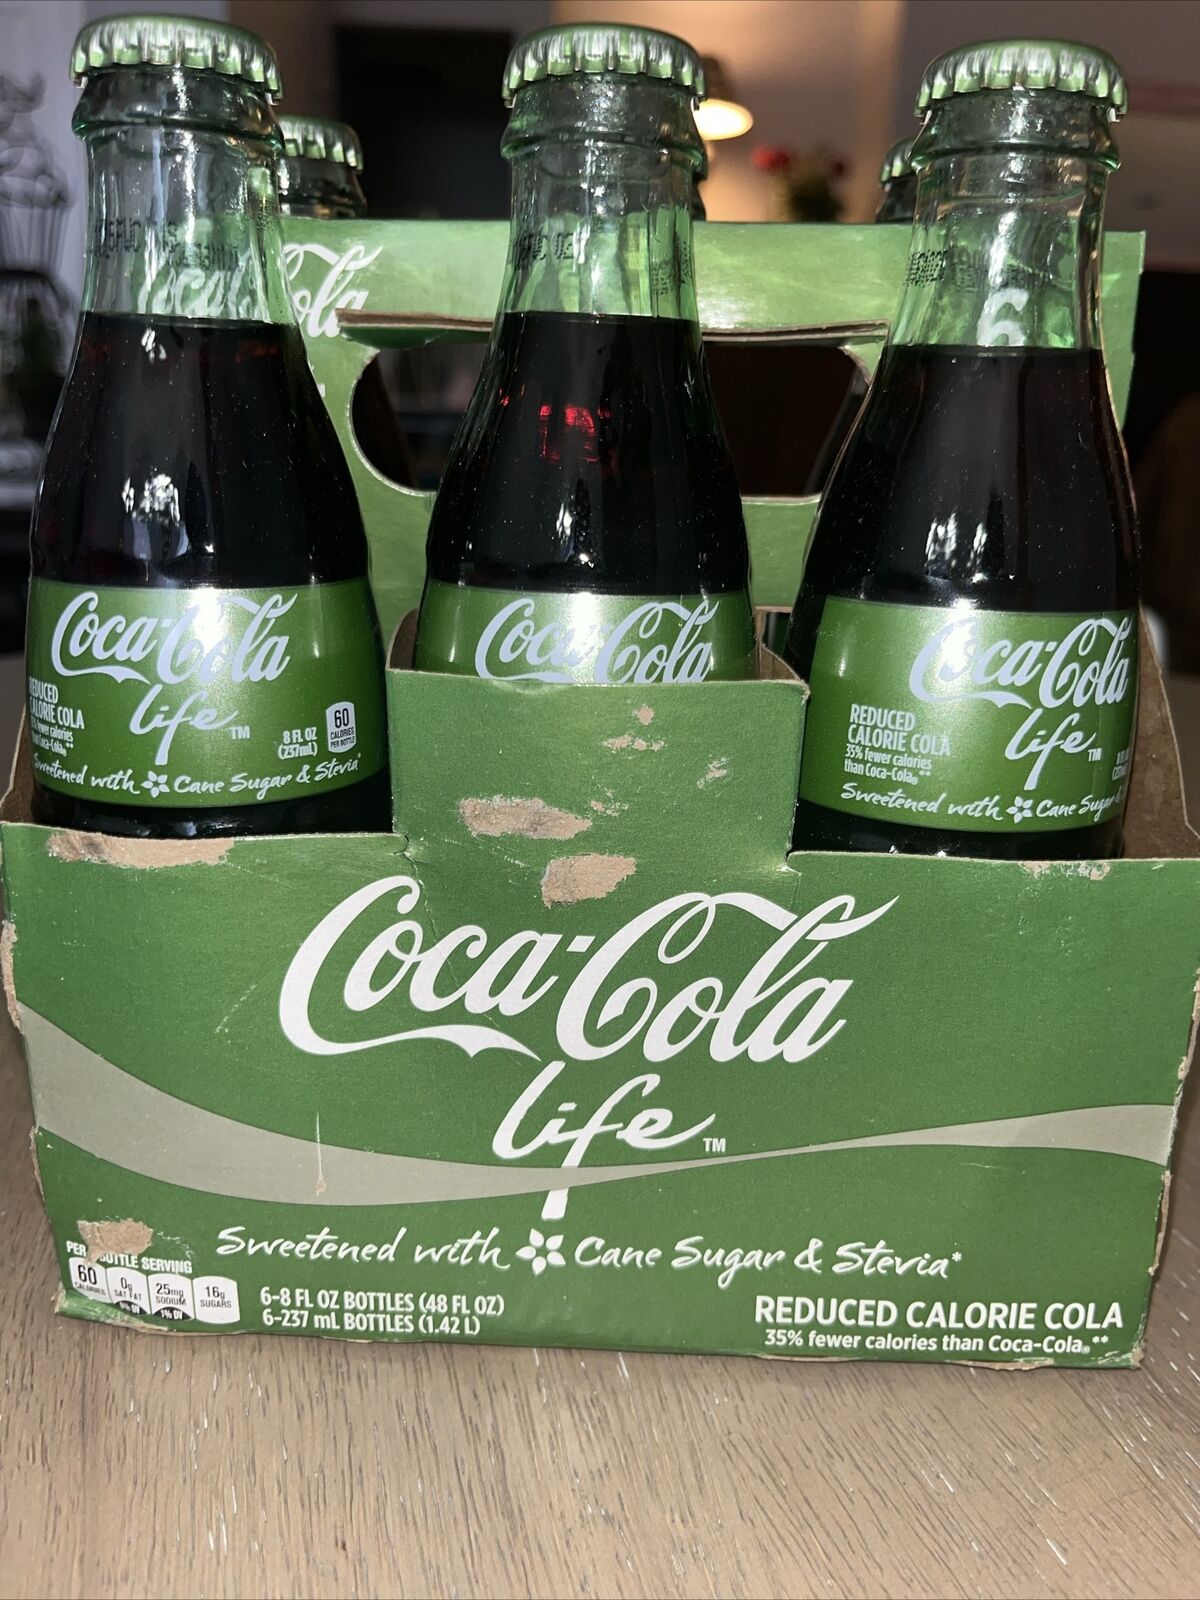 Coca Cola Life Reduced Calorie  6-8 FL Oz Glass Bottle Cane Sugar and Stevia